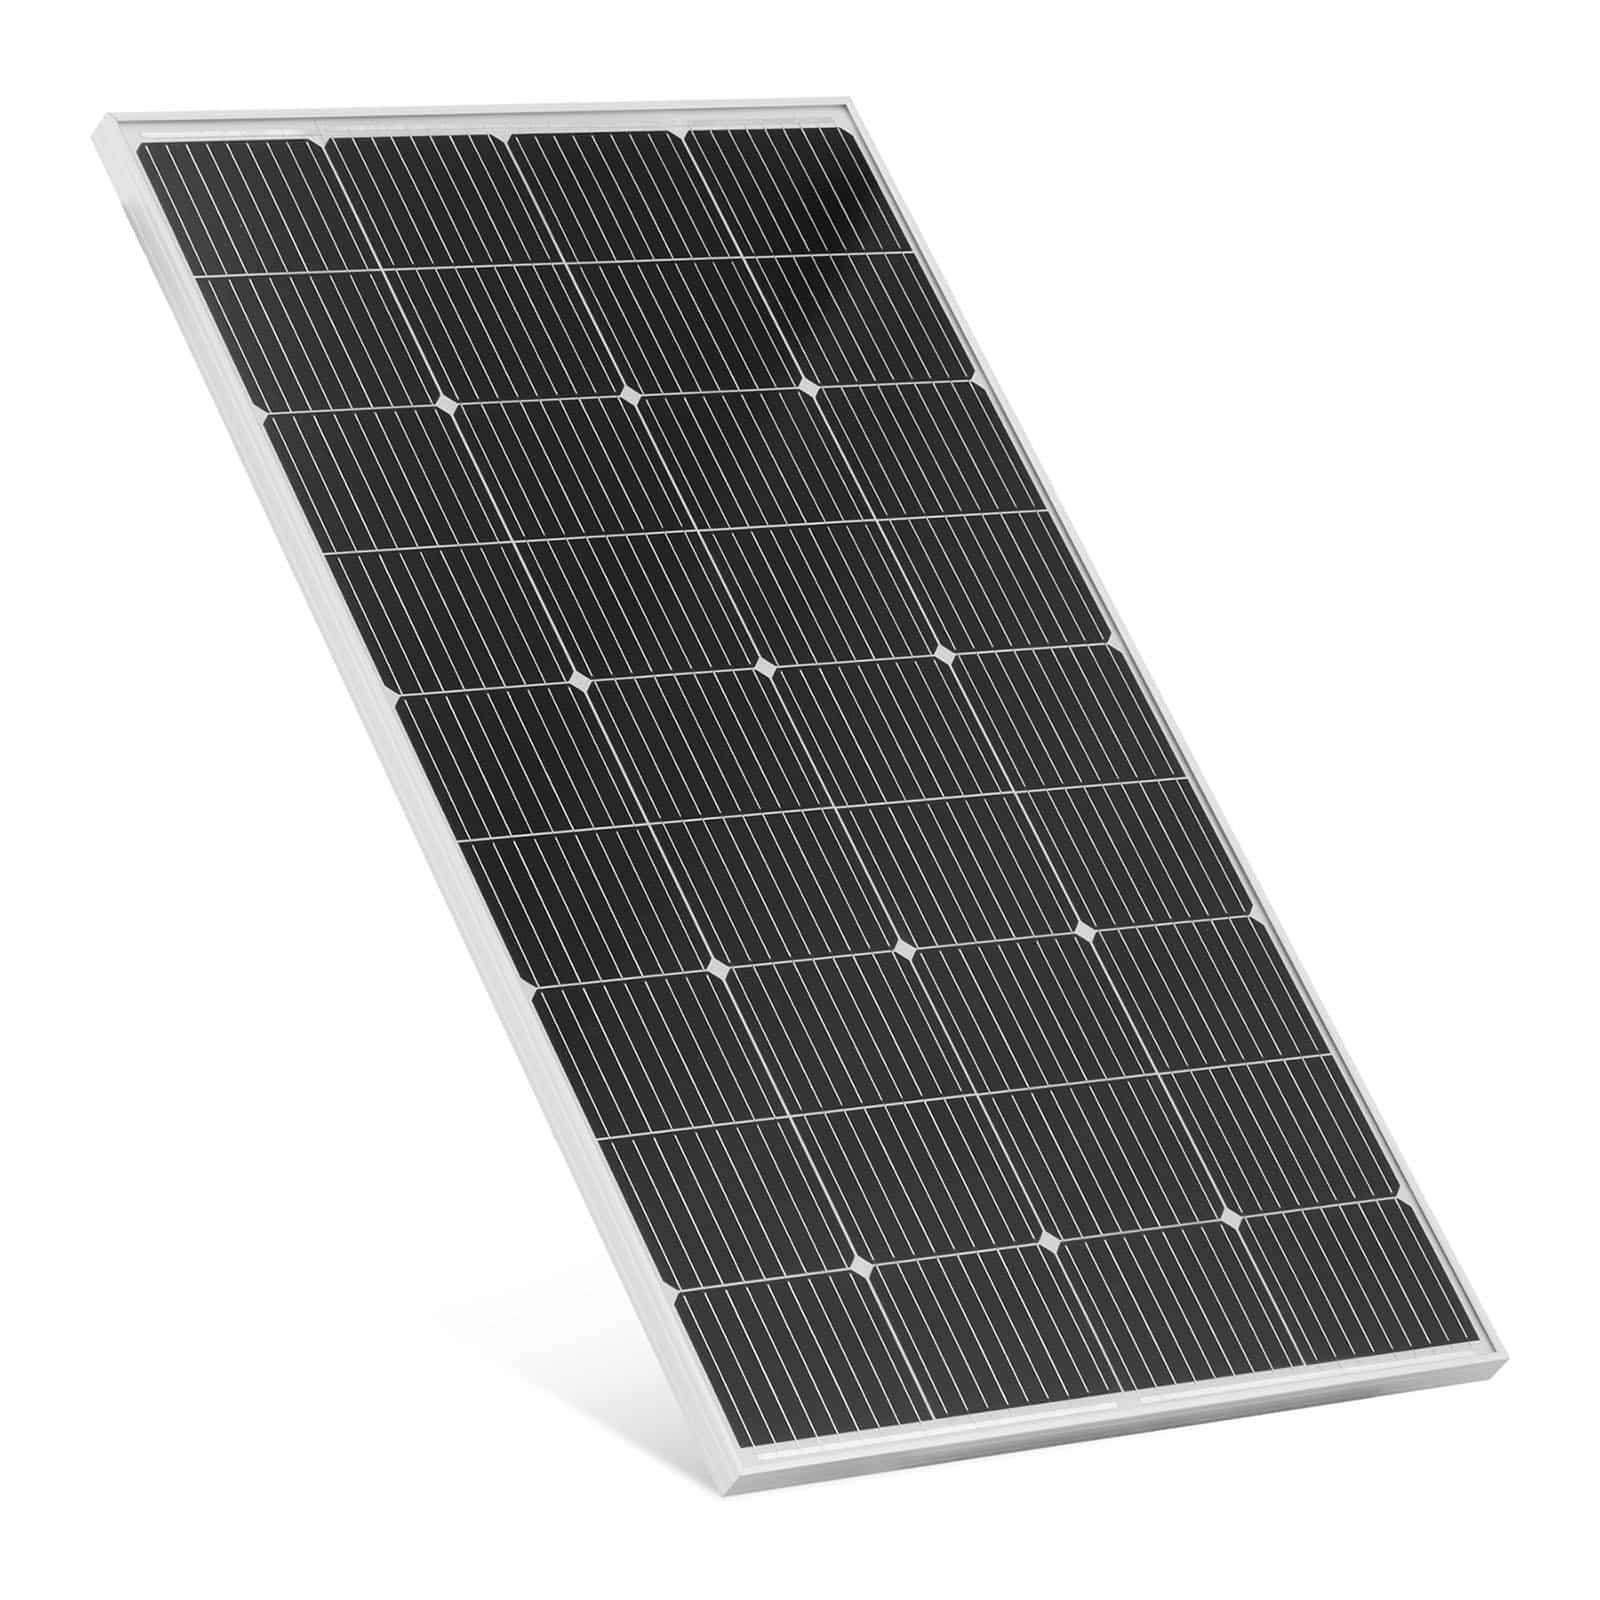 160W Monkristallines mit Bypass-Technologie MSW Solarmodul Solarpanel